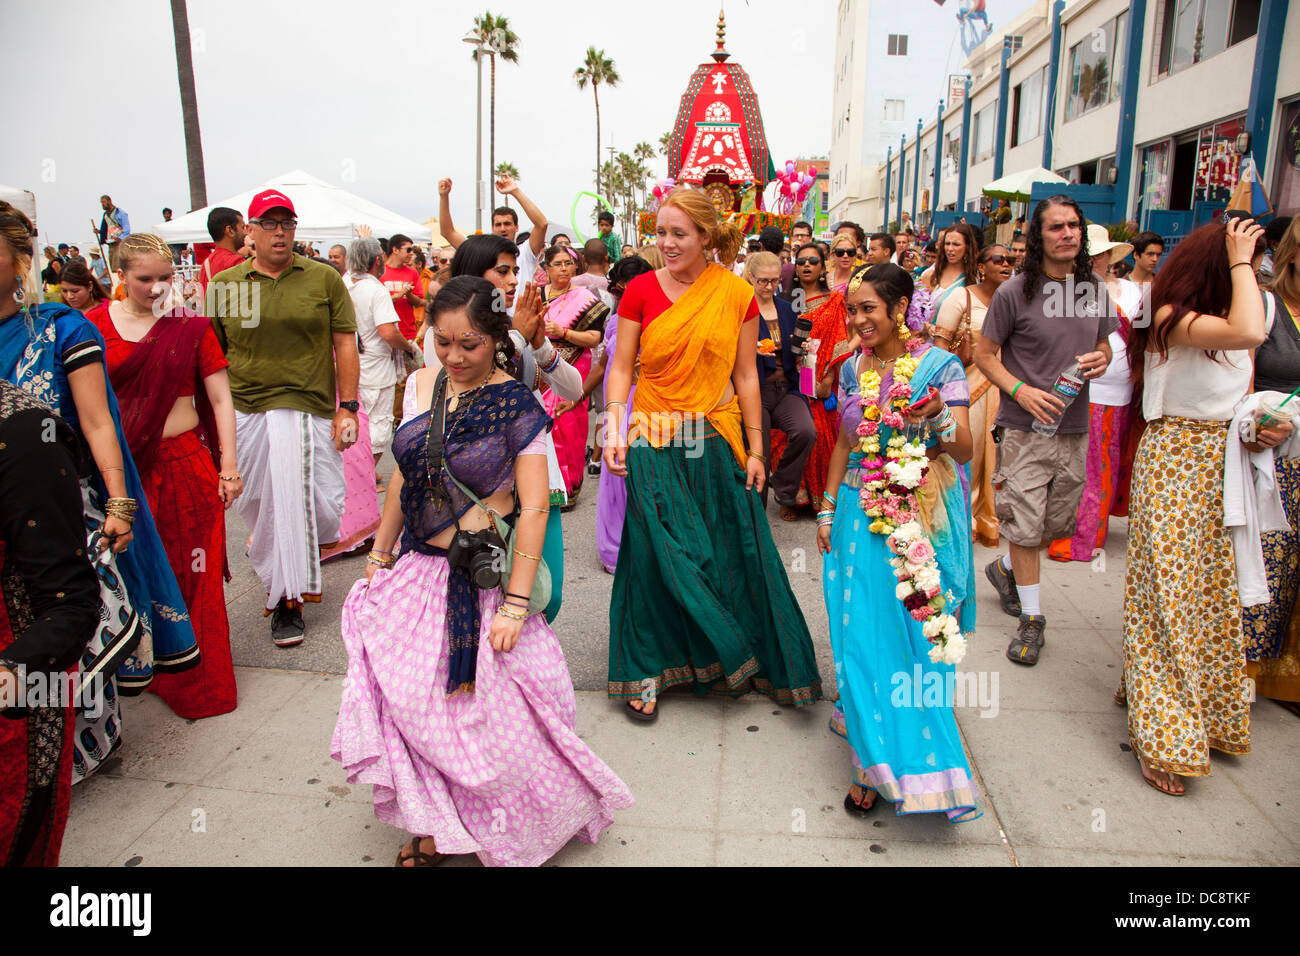 Parade, Hare Krishna Festival - August 4, 2013 - Venice Beach, Los Angeles, California, United States of America Stock Photo